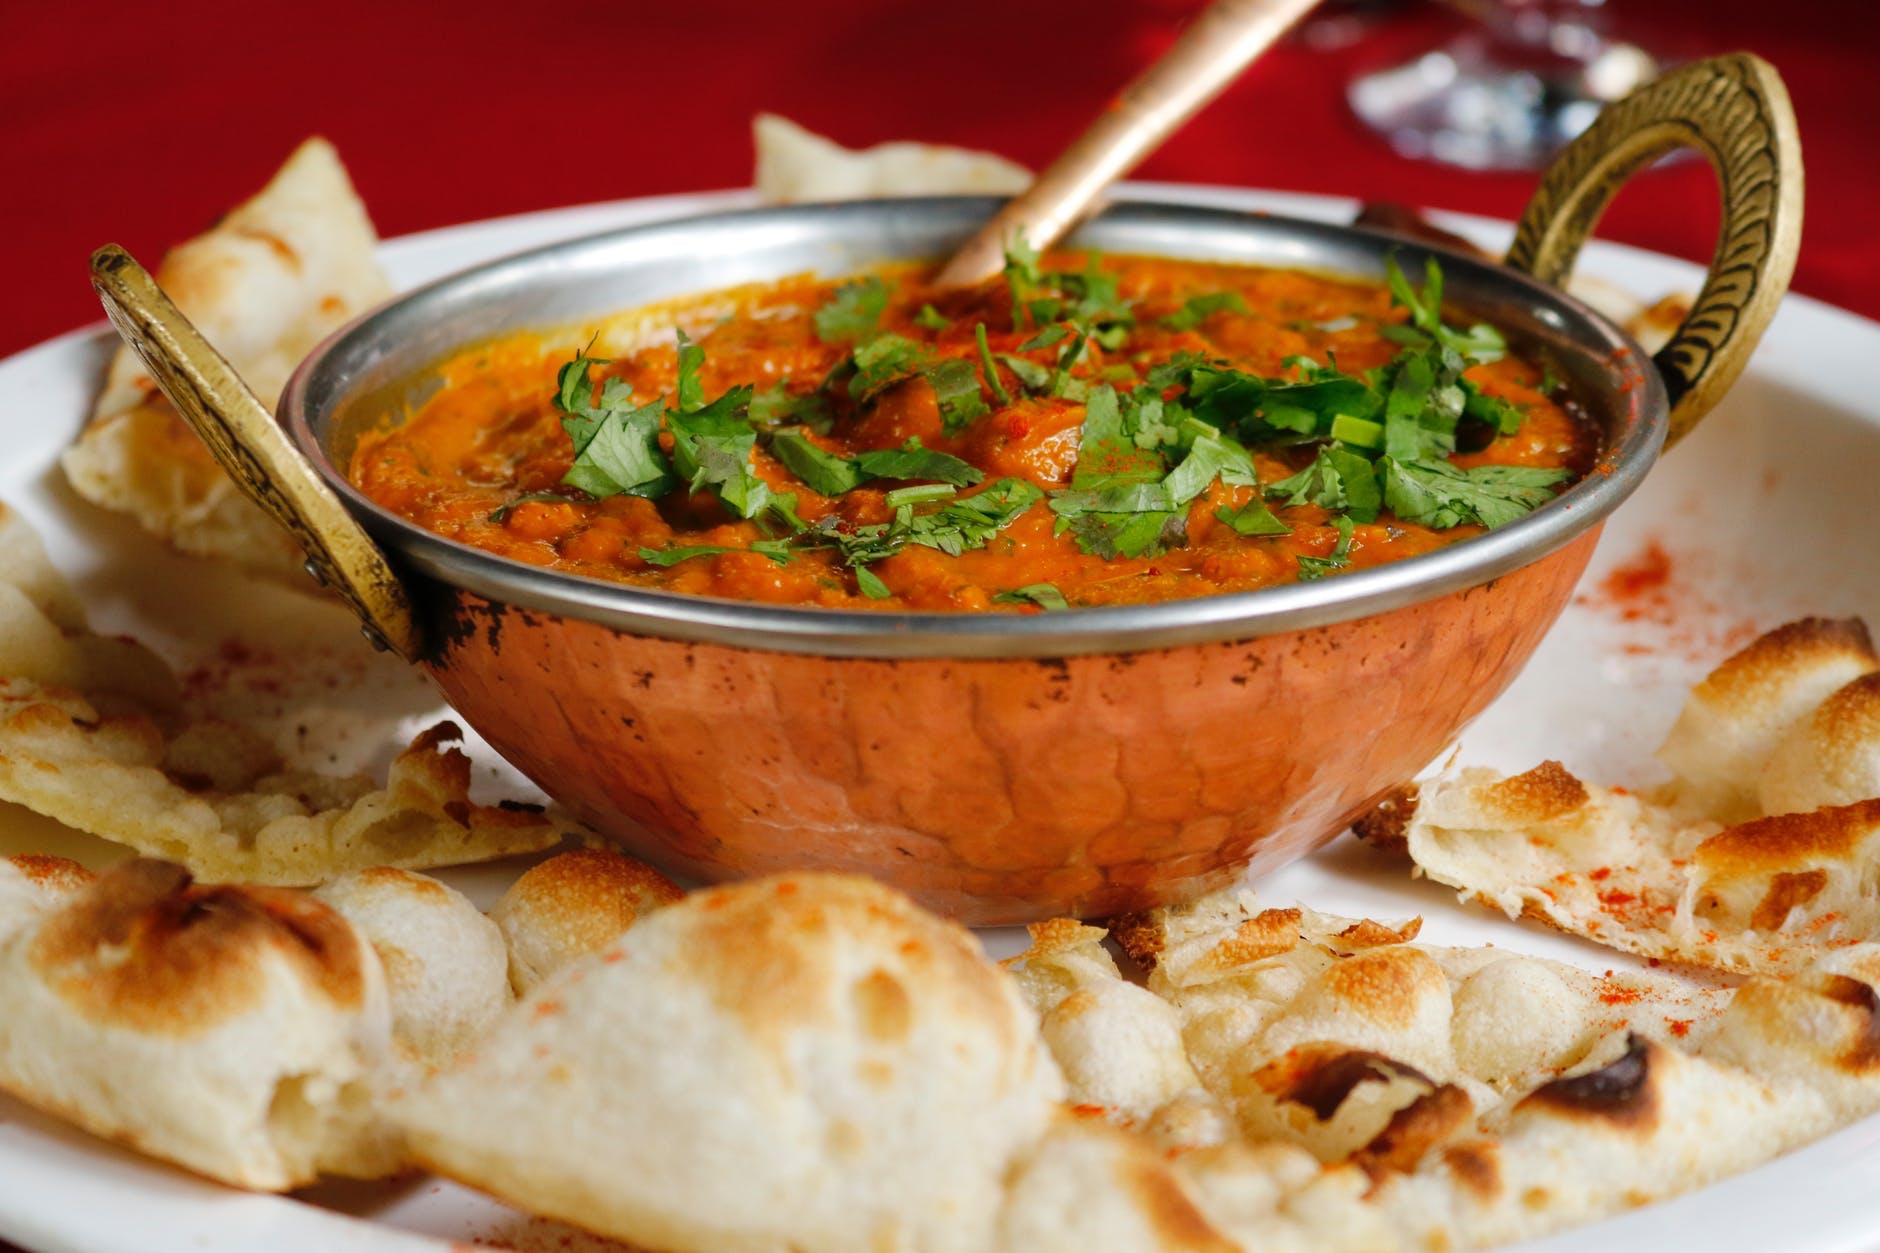 Dish,Food,Cuisine,Ingredient,Punjabi cuisine,Curry,Produce,Naan,Gravy,Indian cuisine